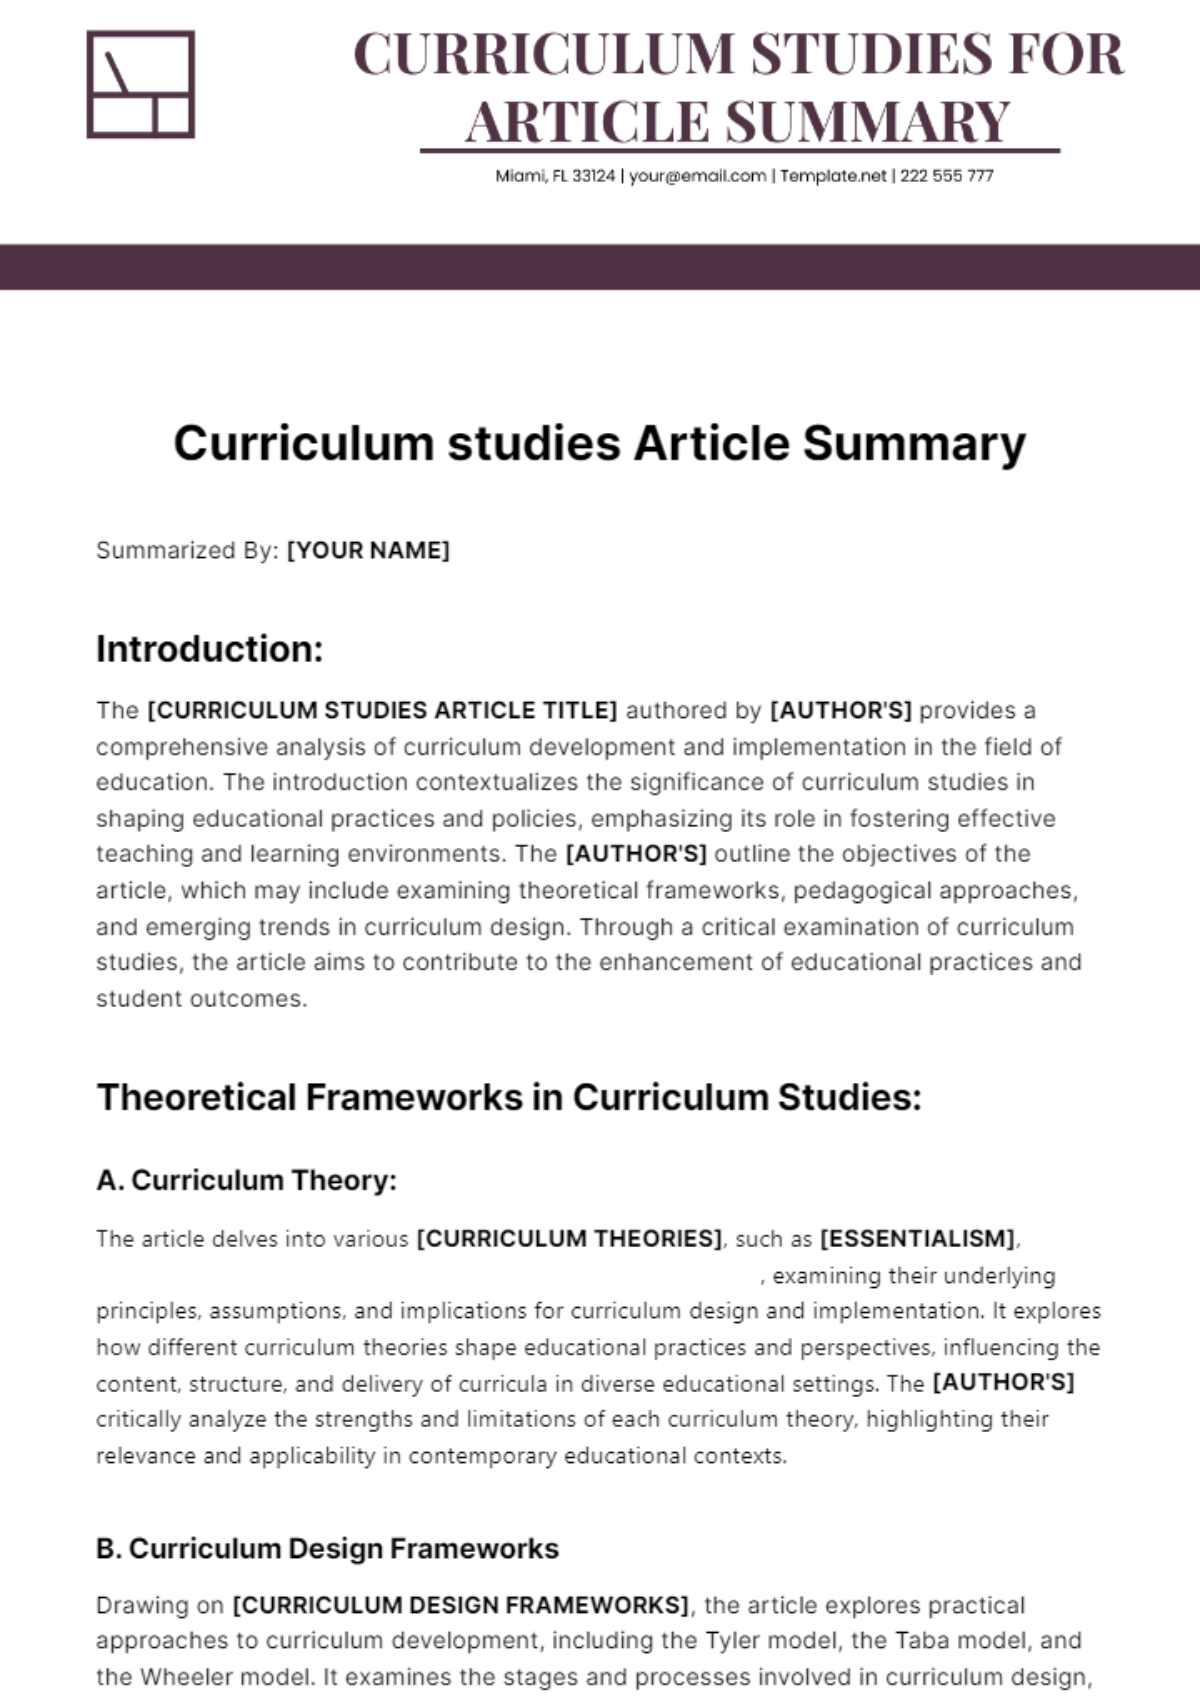 Free Curriculum studies Article Summary